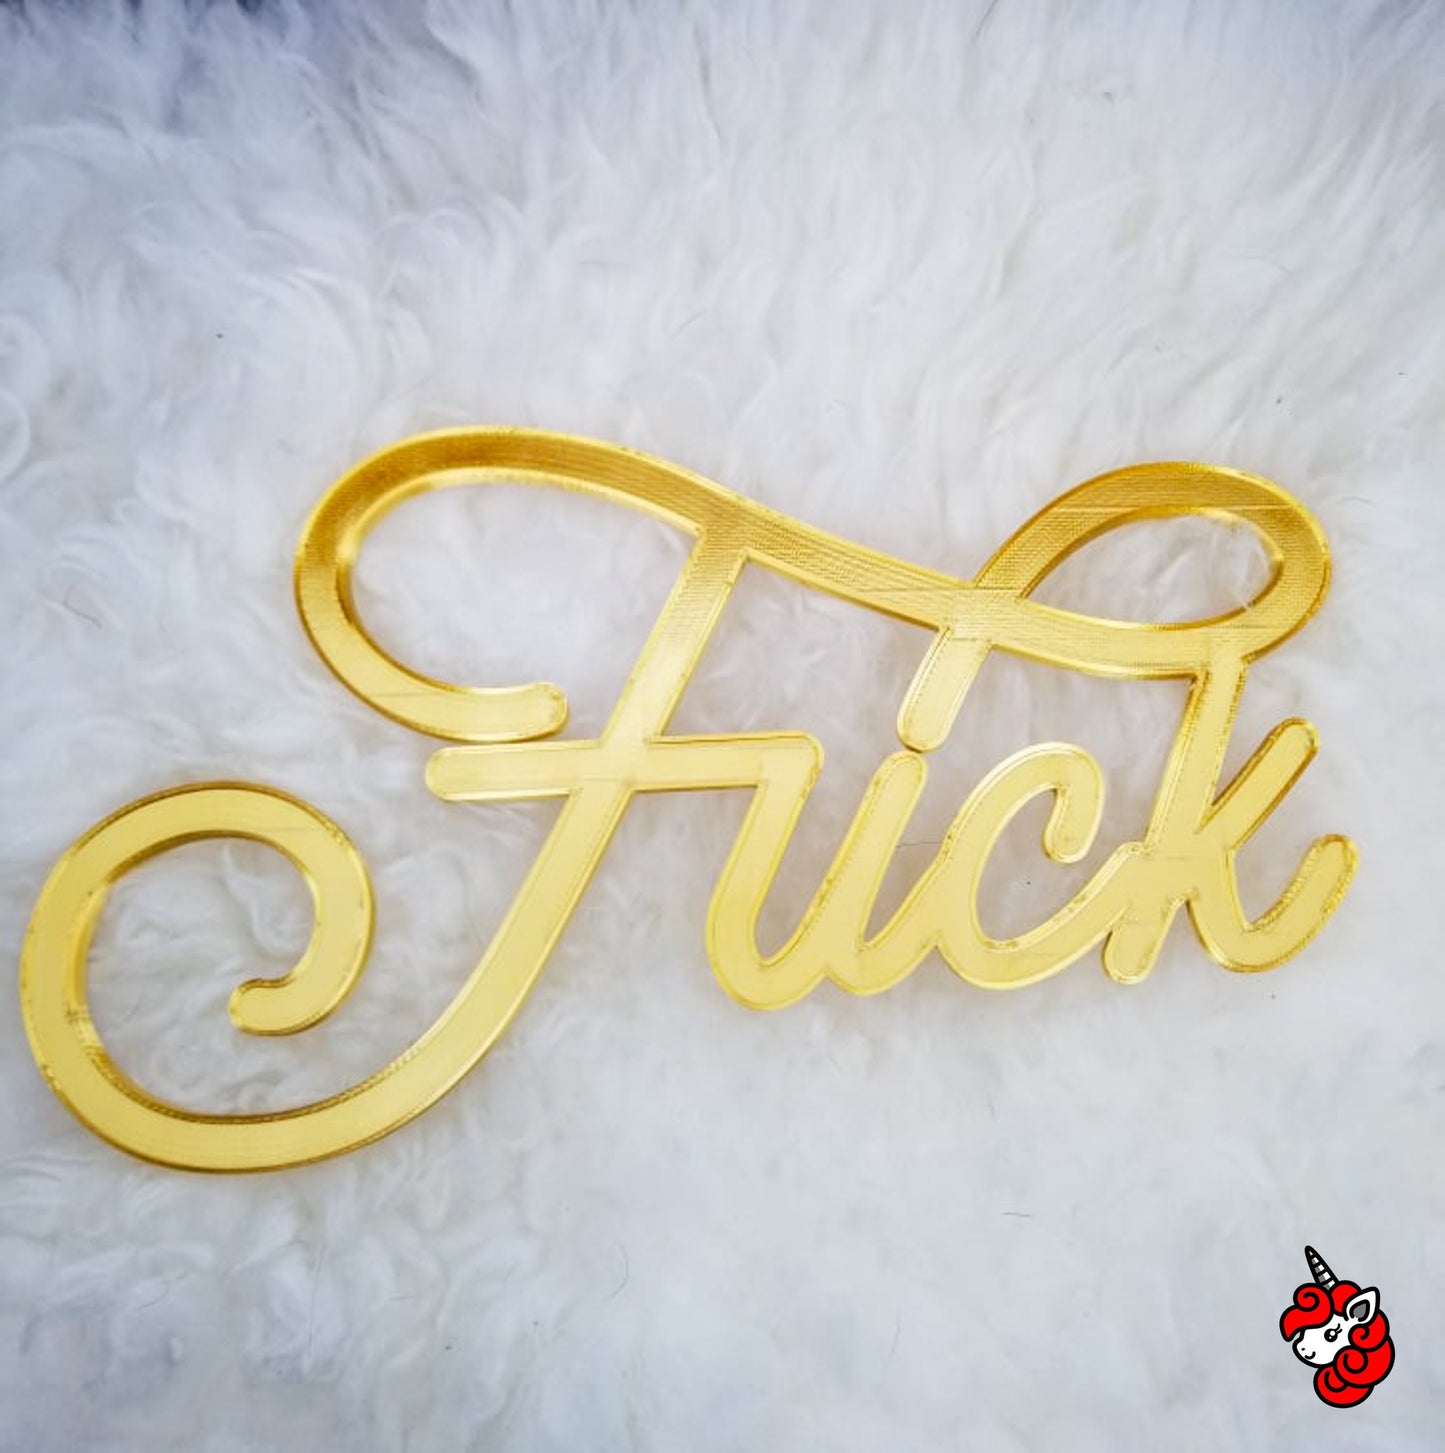 3D Printed F*ck wall art | word art, typography